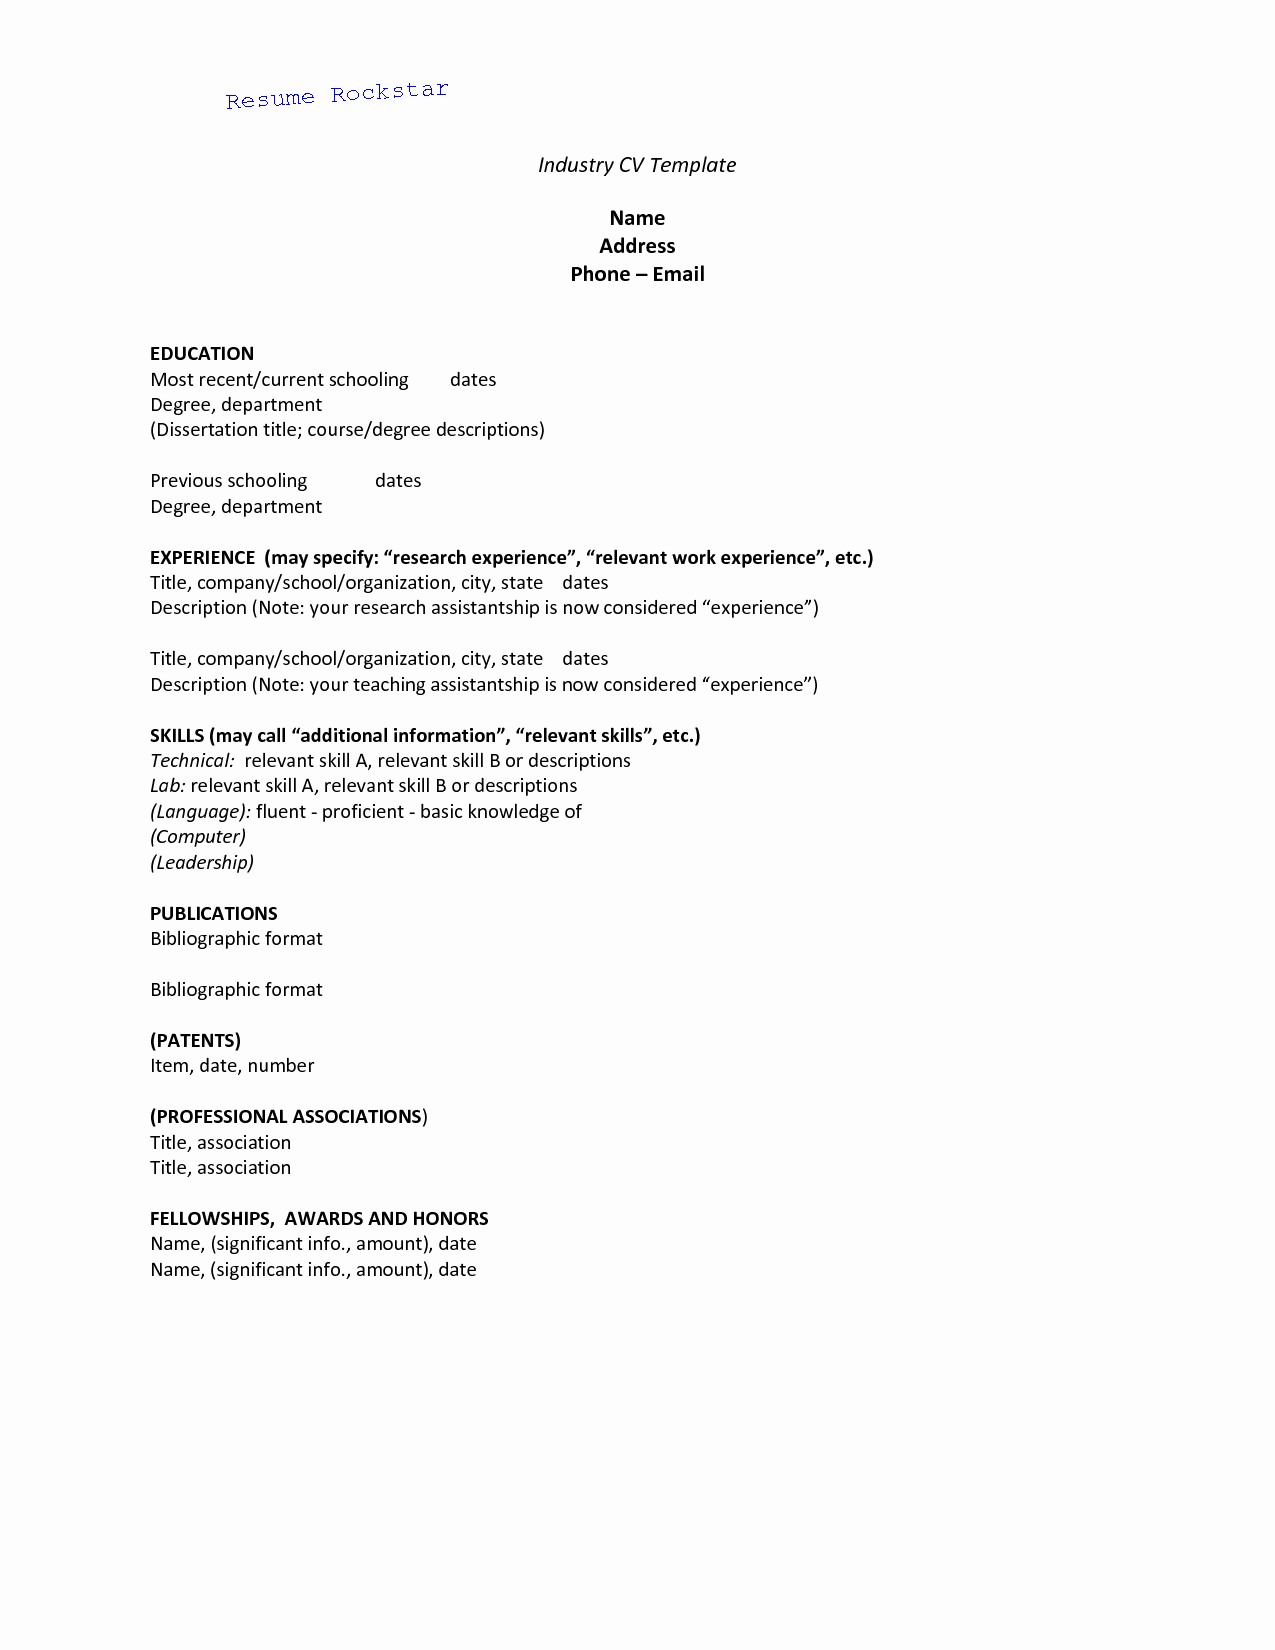 Resume and Cover Letter formats Elegant Basic Cover Letter for A Resume